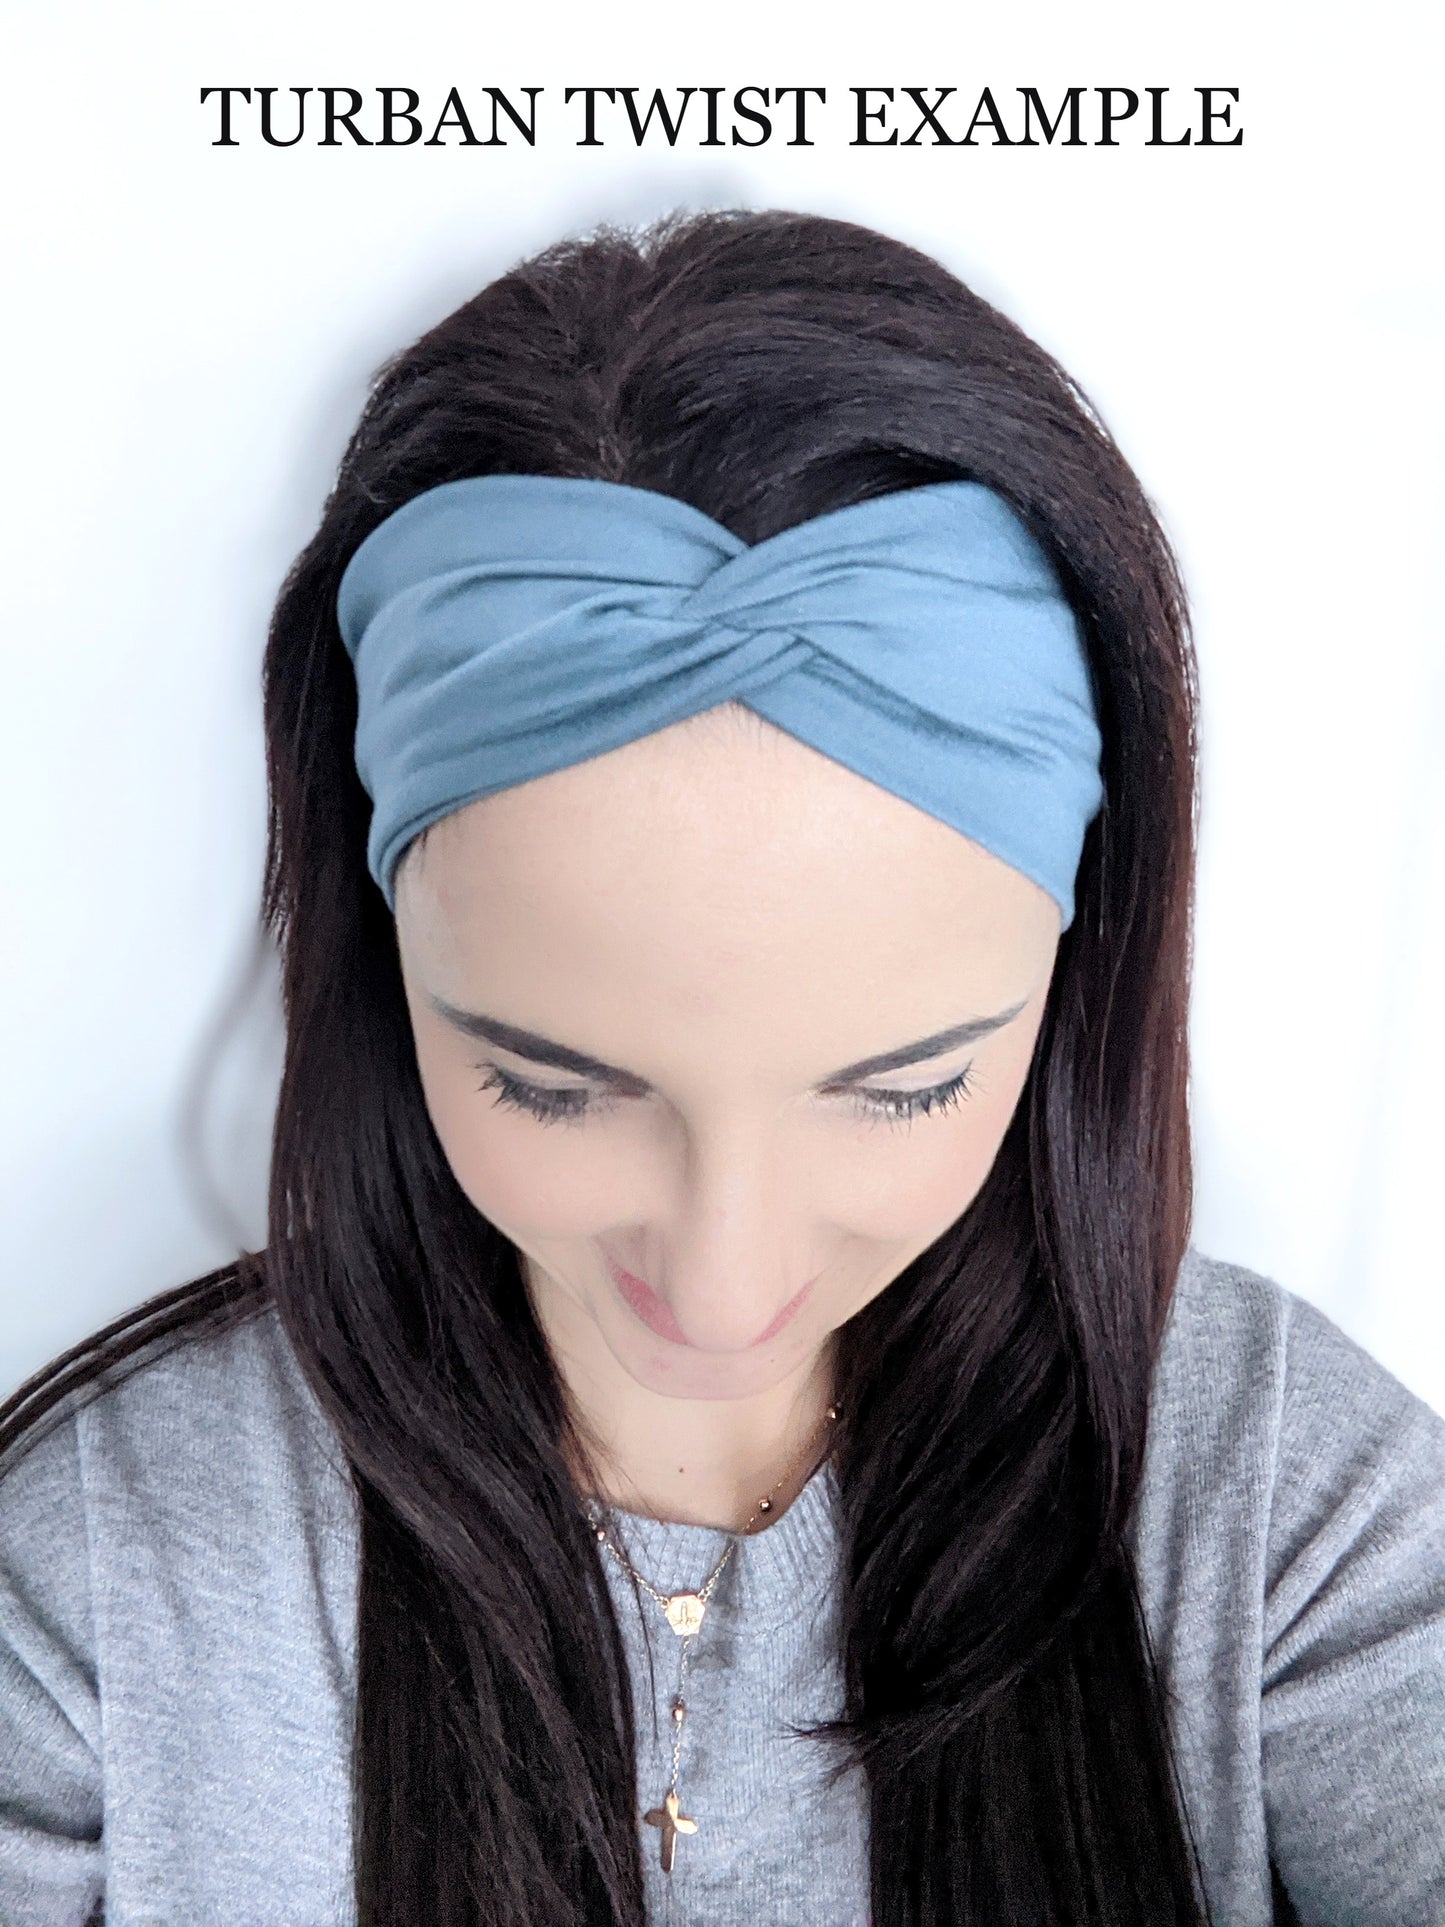 Doodle Paw Headband for Women | WIDE OR TURBAN TWIST